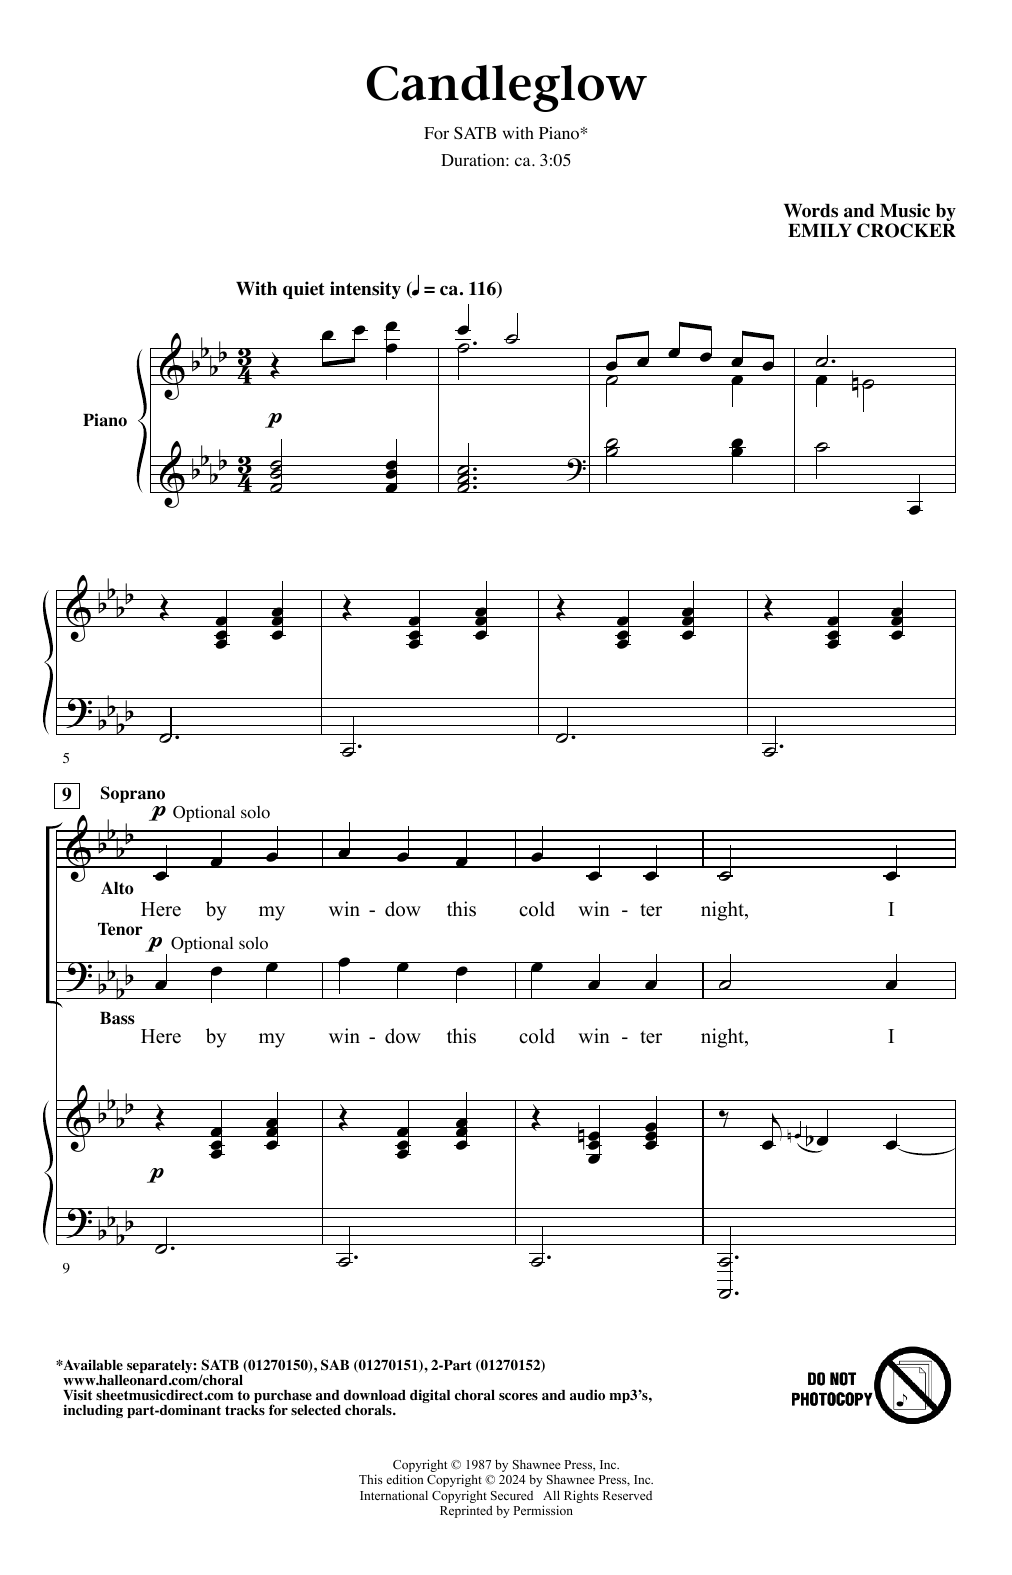 Emily Crocker Candleglow Sheet Music Notes & Chords for SATB Choir - Download or Print PDF